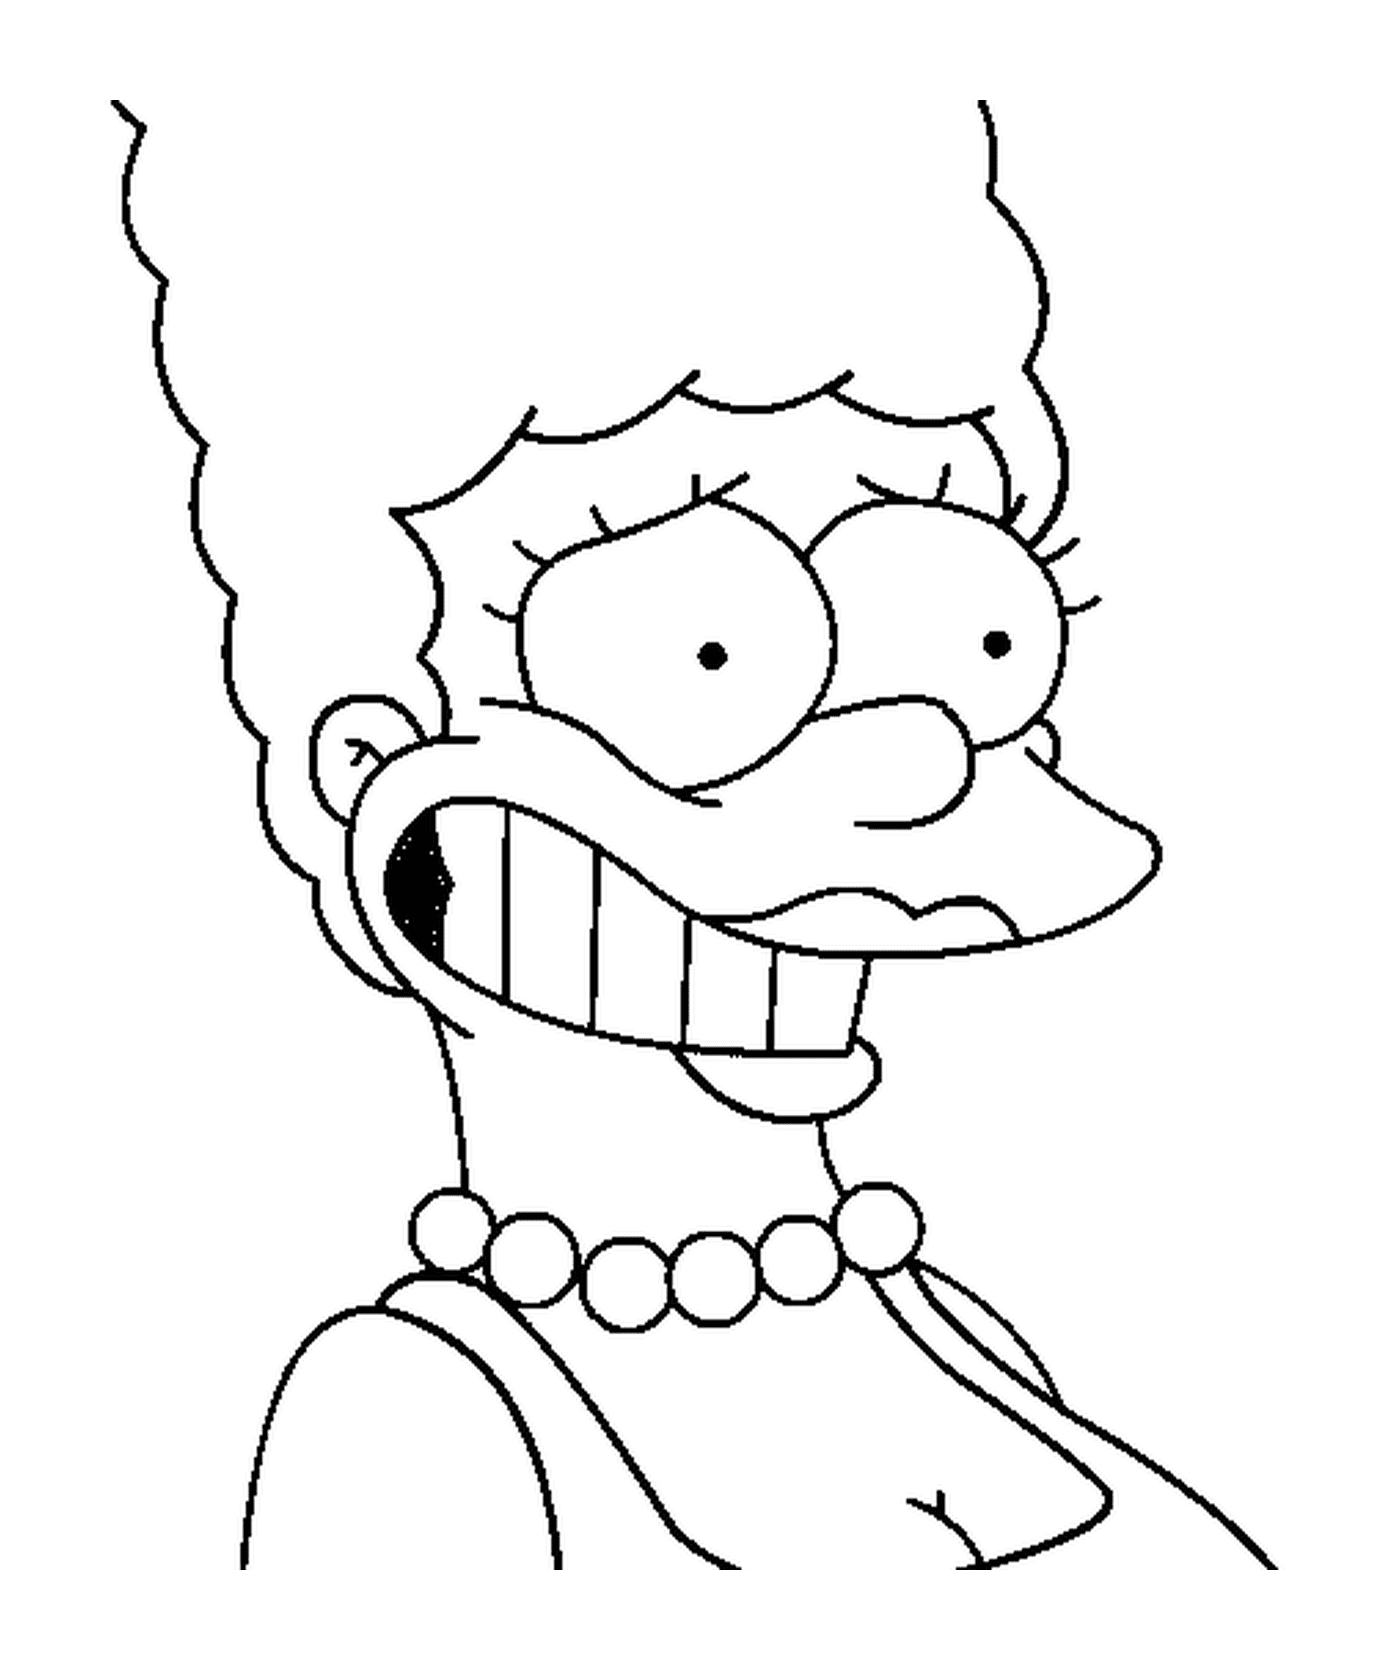  Мардж Симпсон, макияж 